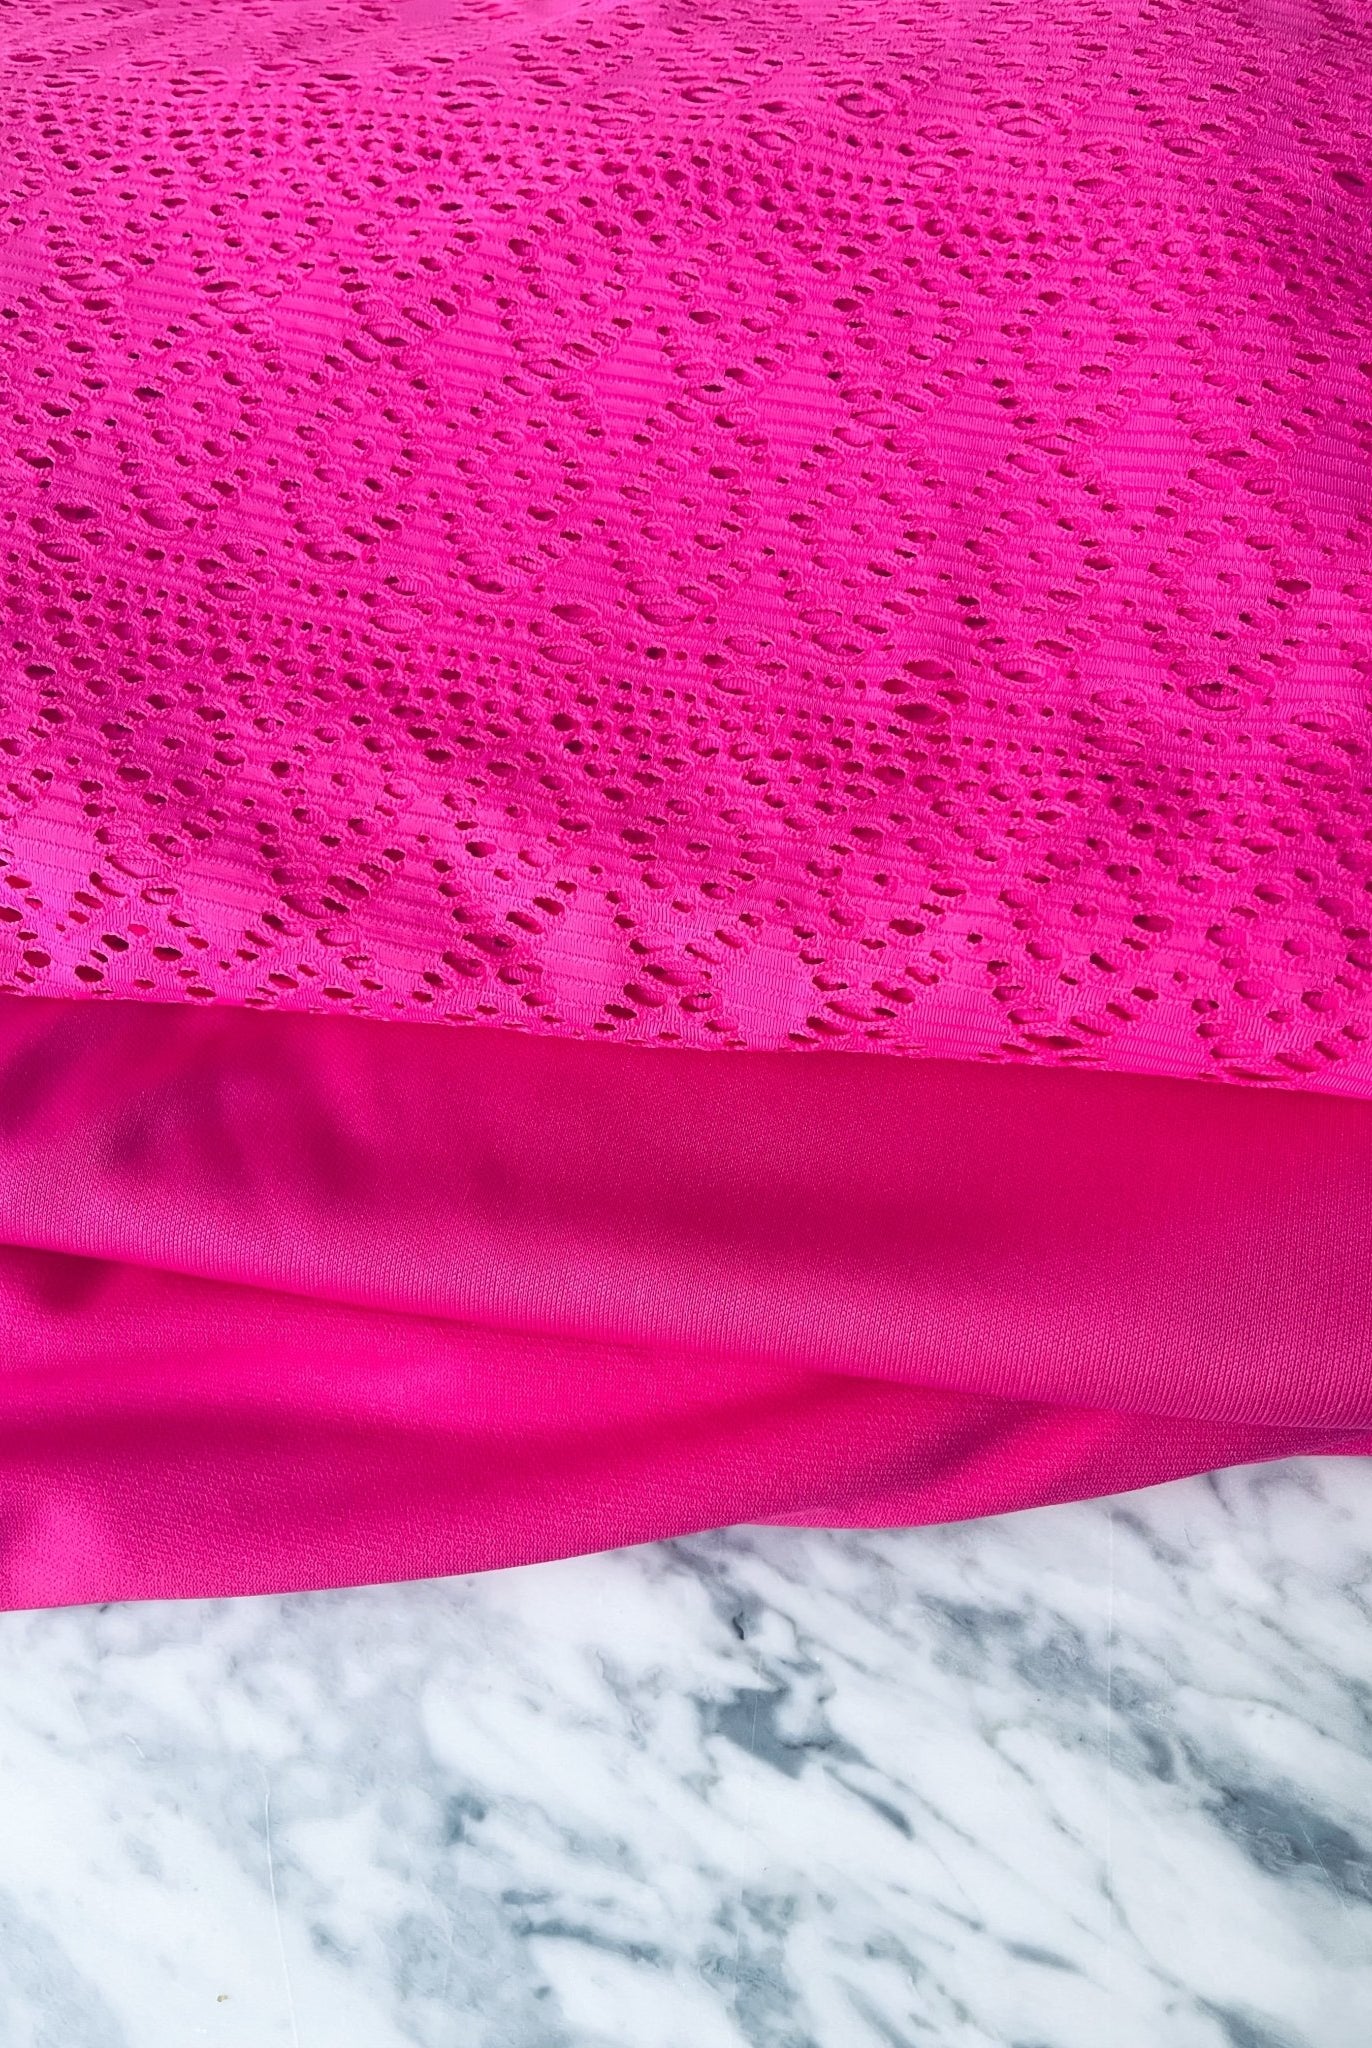 For Jamie, 2 Yards of Malibu Pink Stretch Lace - Boho Fabrics